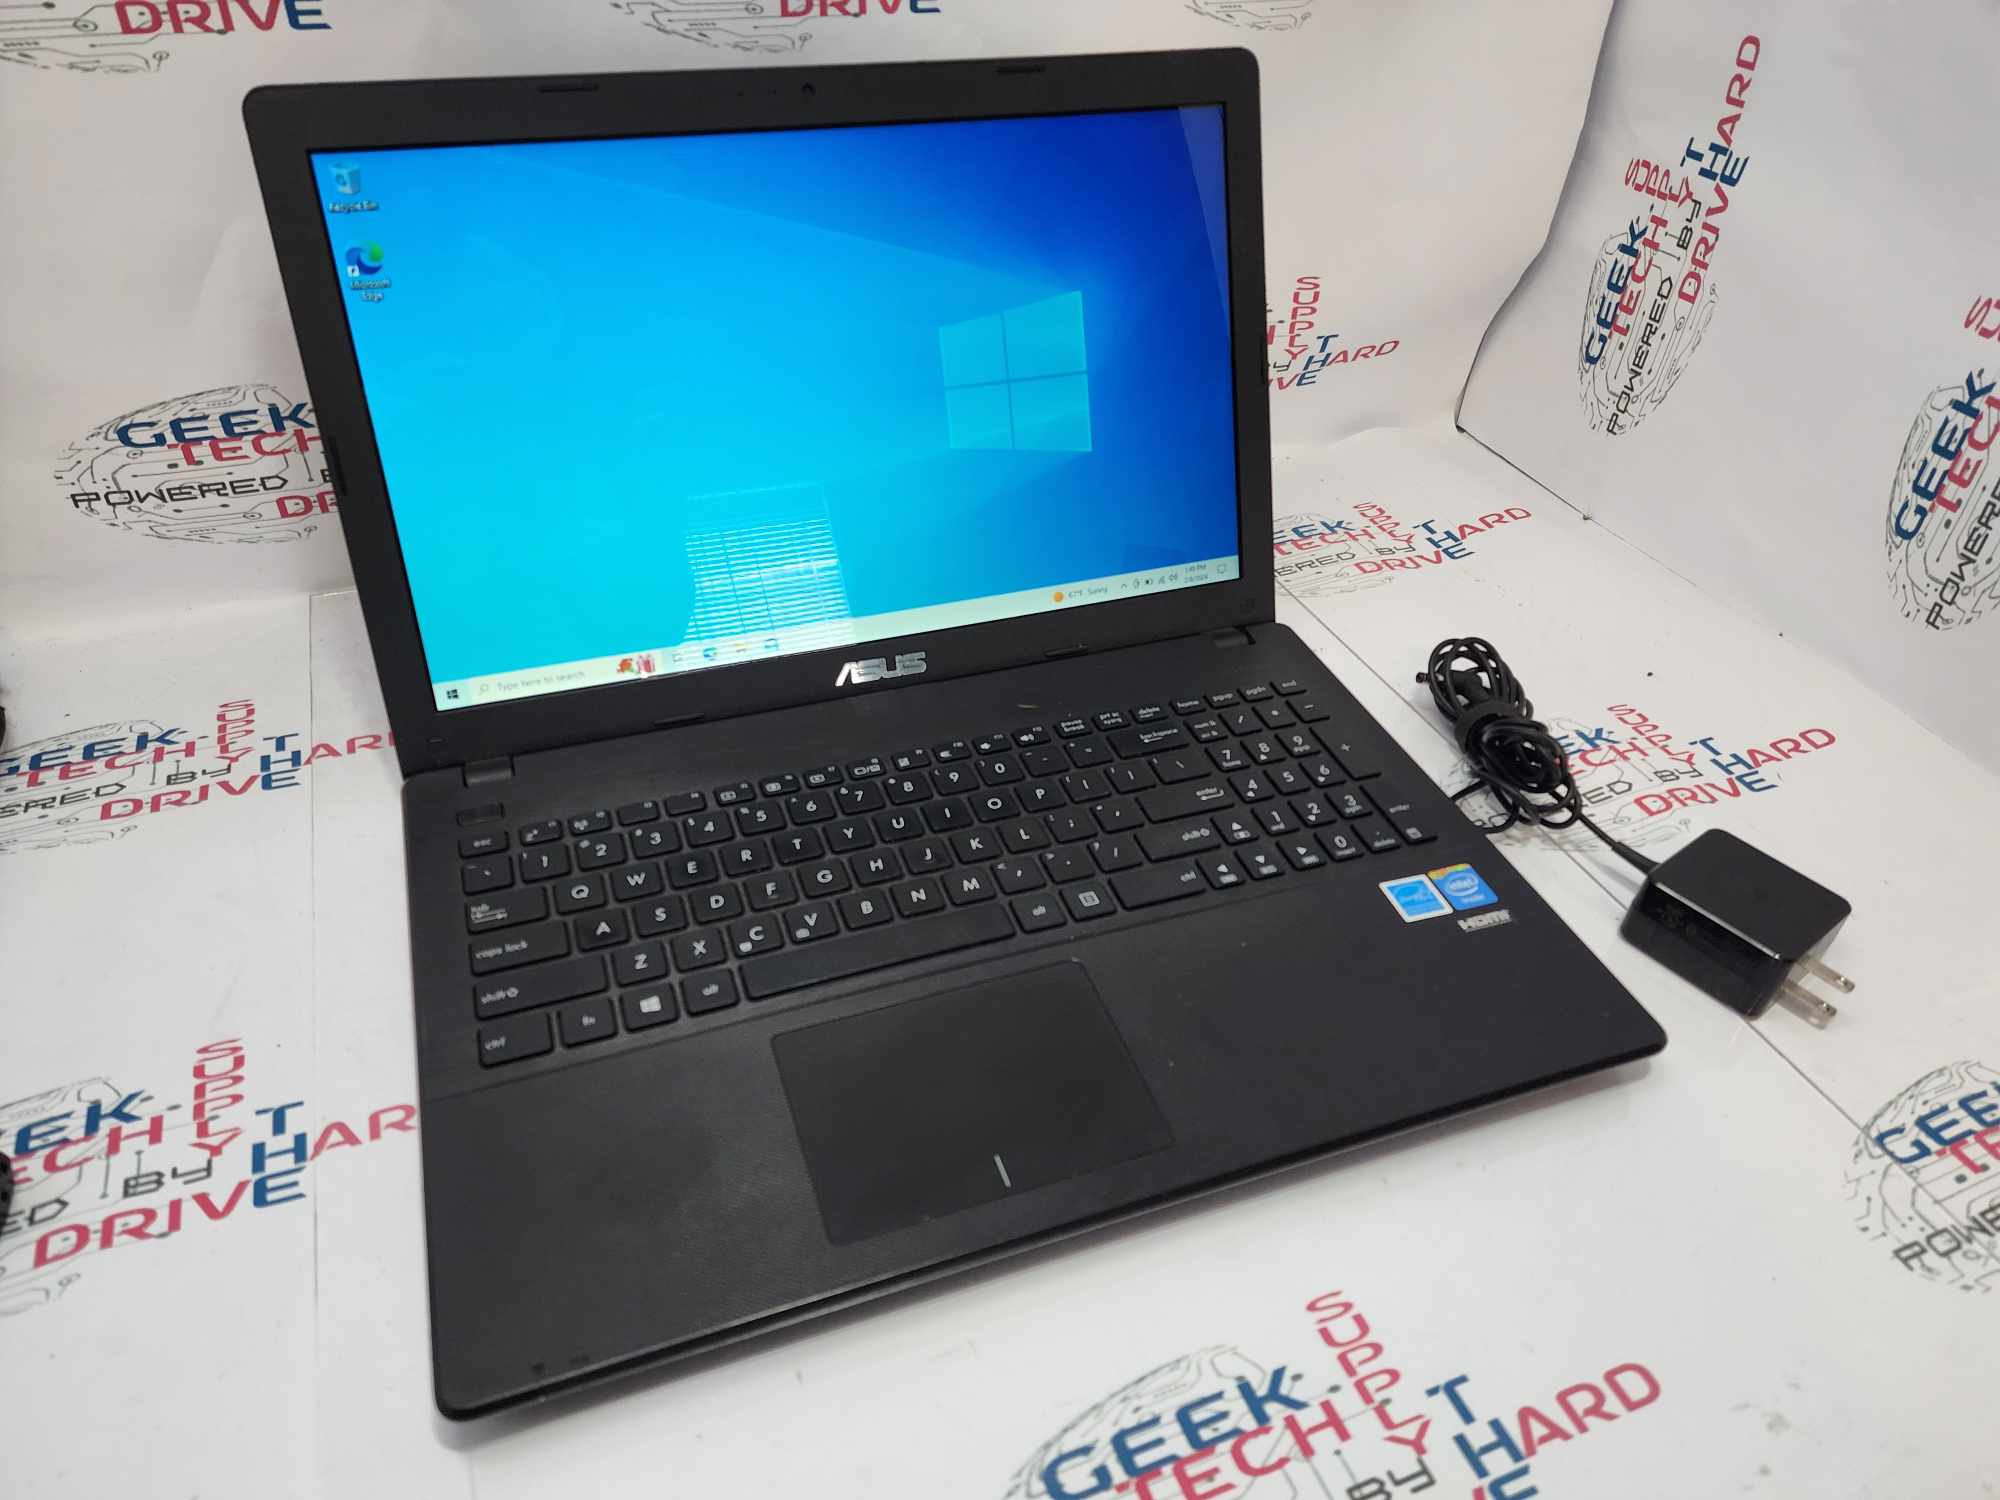 Asus X551M Notebook PC 256gb SSD Celeron N 2830 4GB RAM | B Grade - Geek Tech